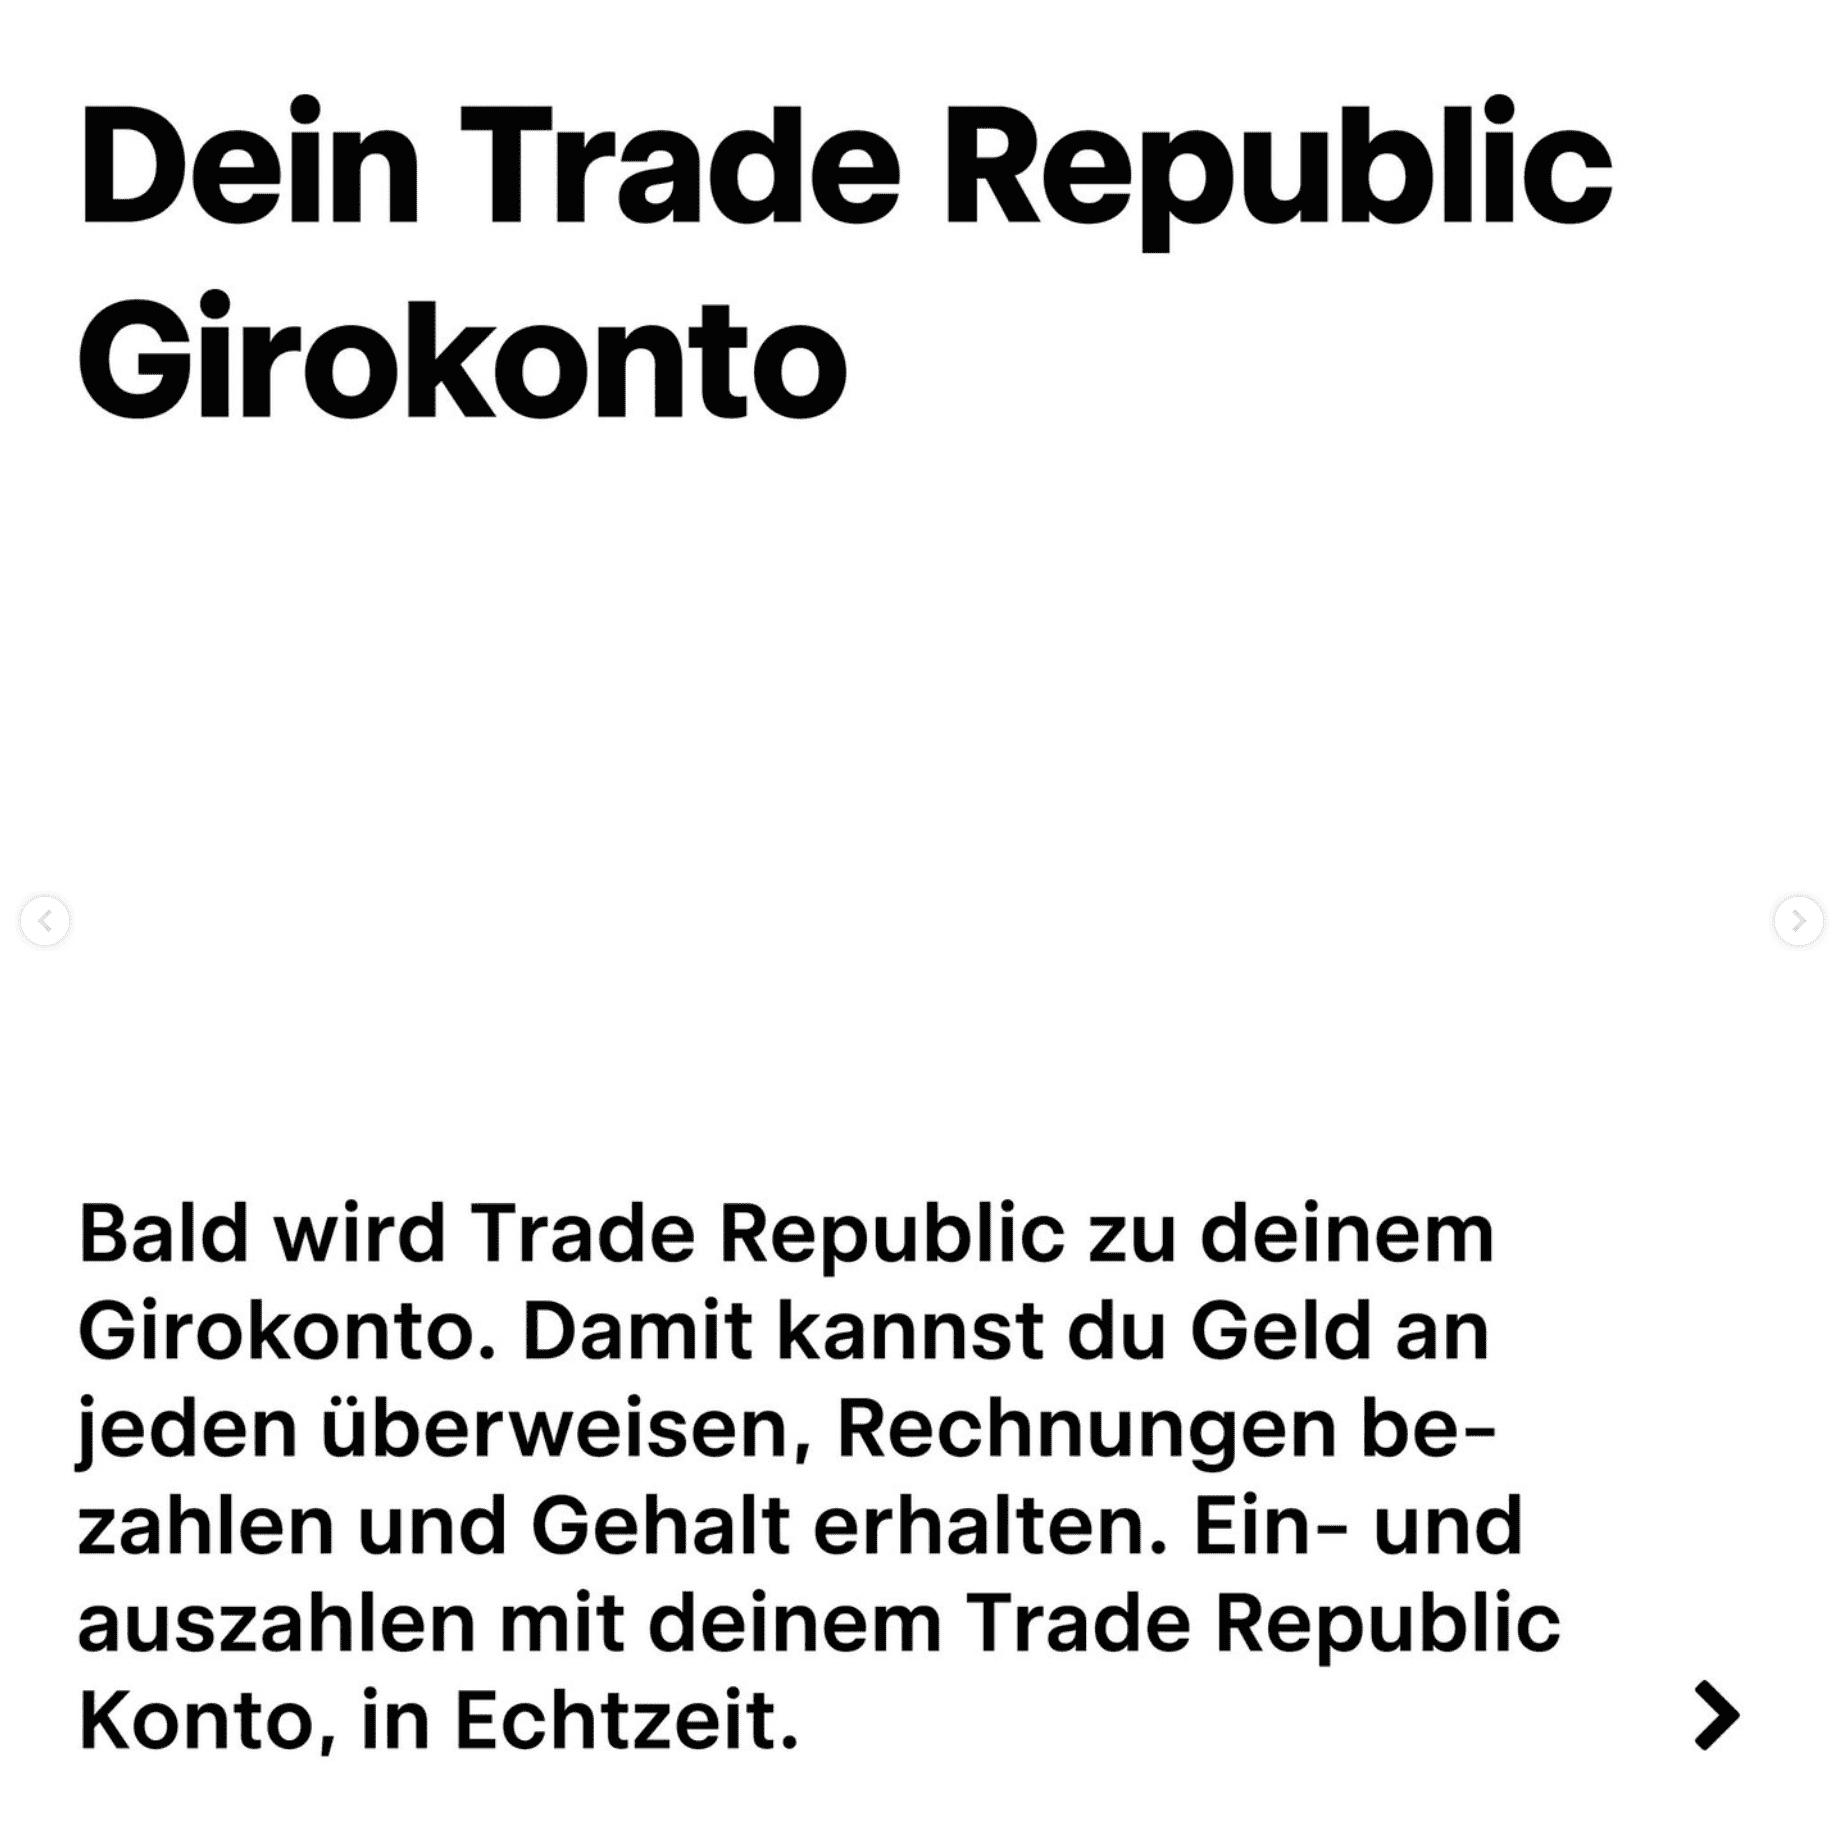 Trade Republic Girokonto kommt